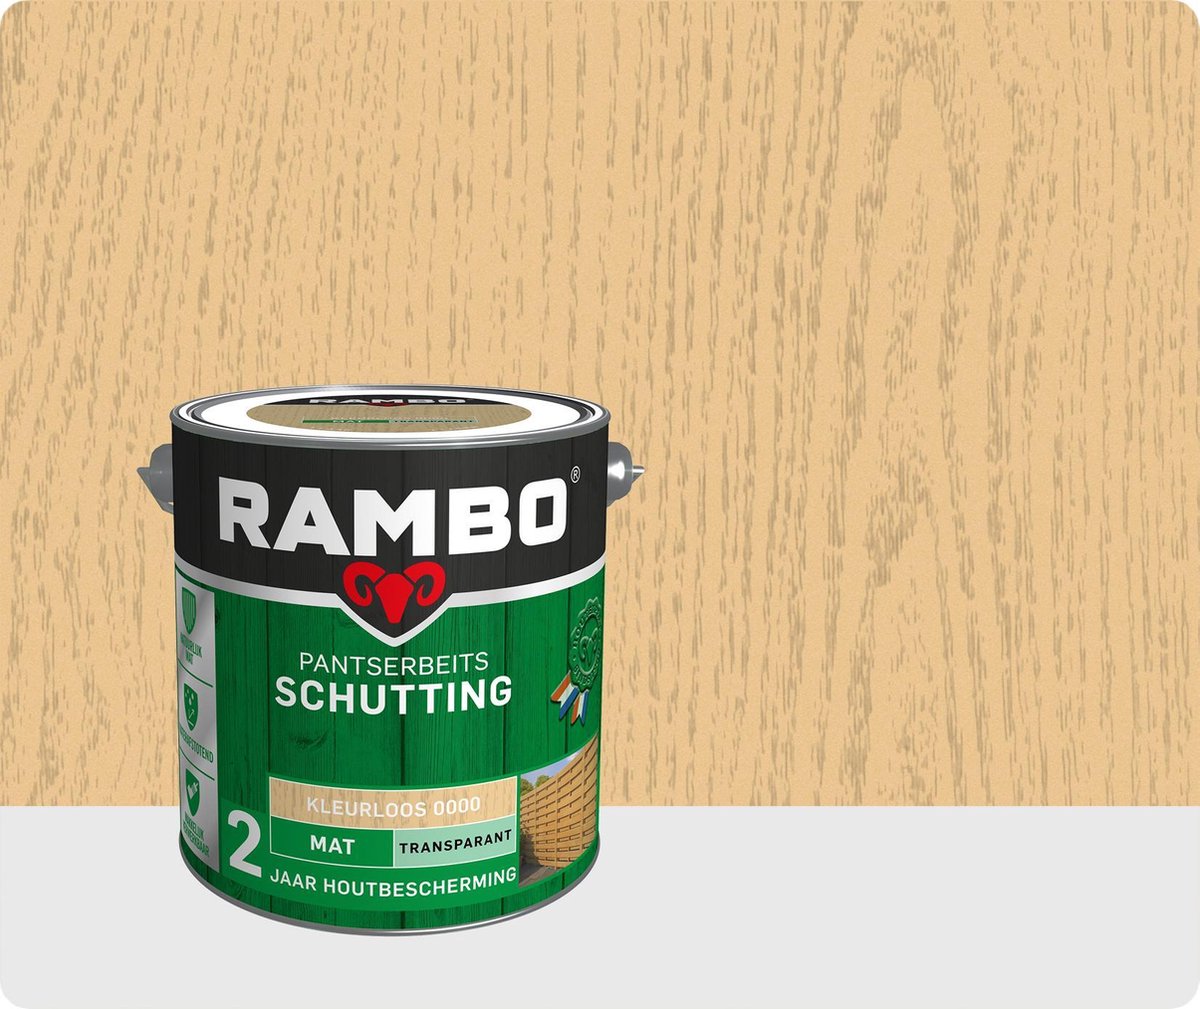 Rambo Schutting pantserbeits mat transparant kleurloos 0000 2,5 l | bol.com